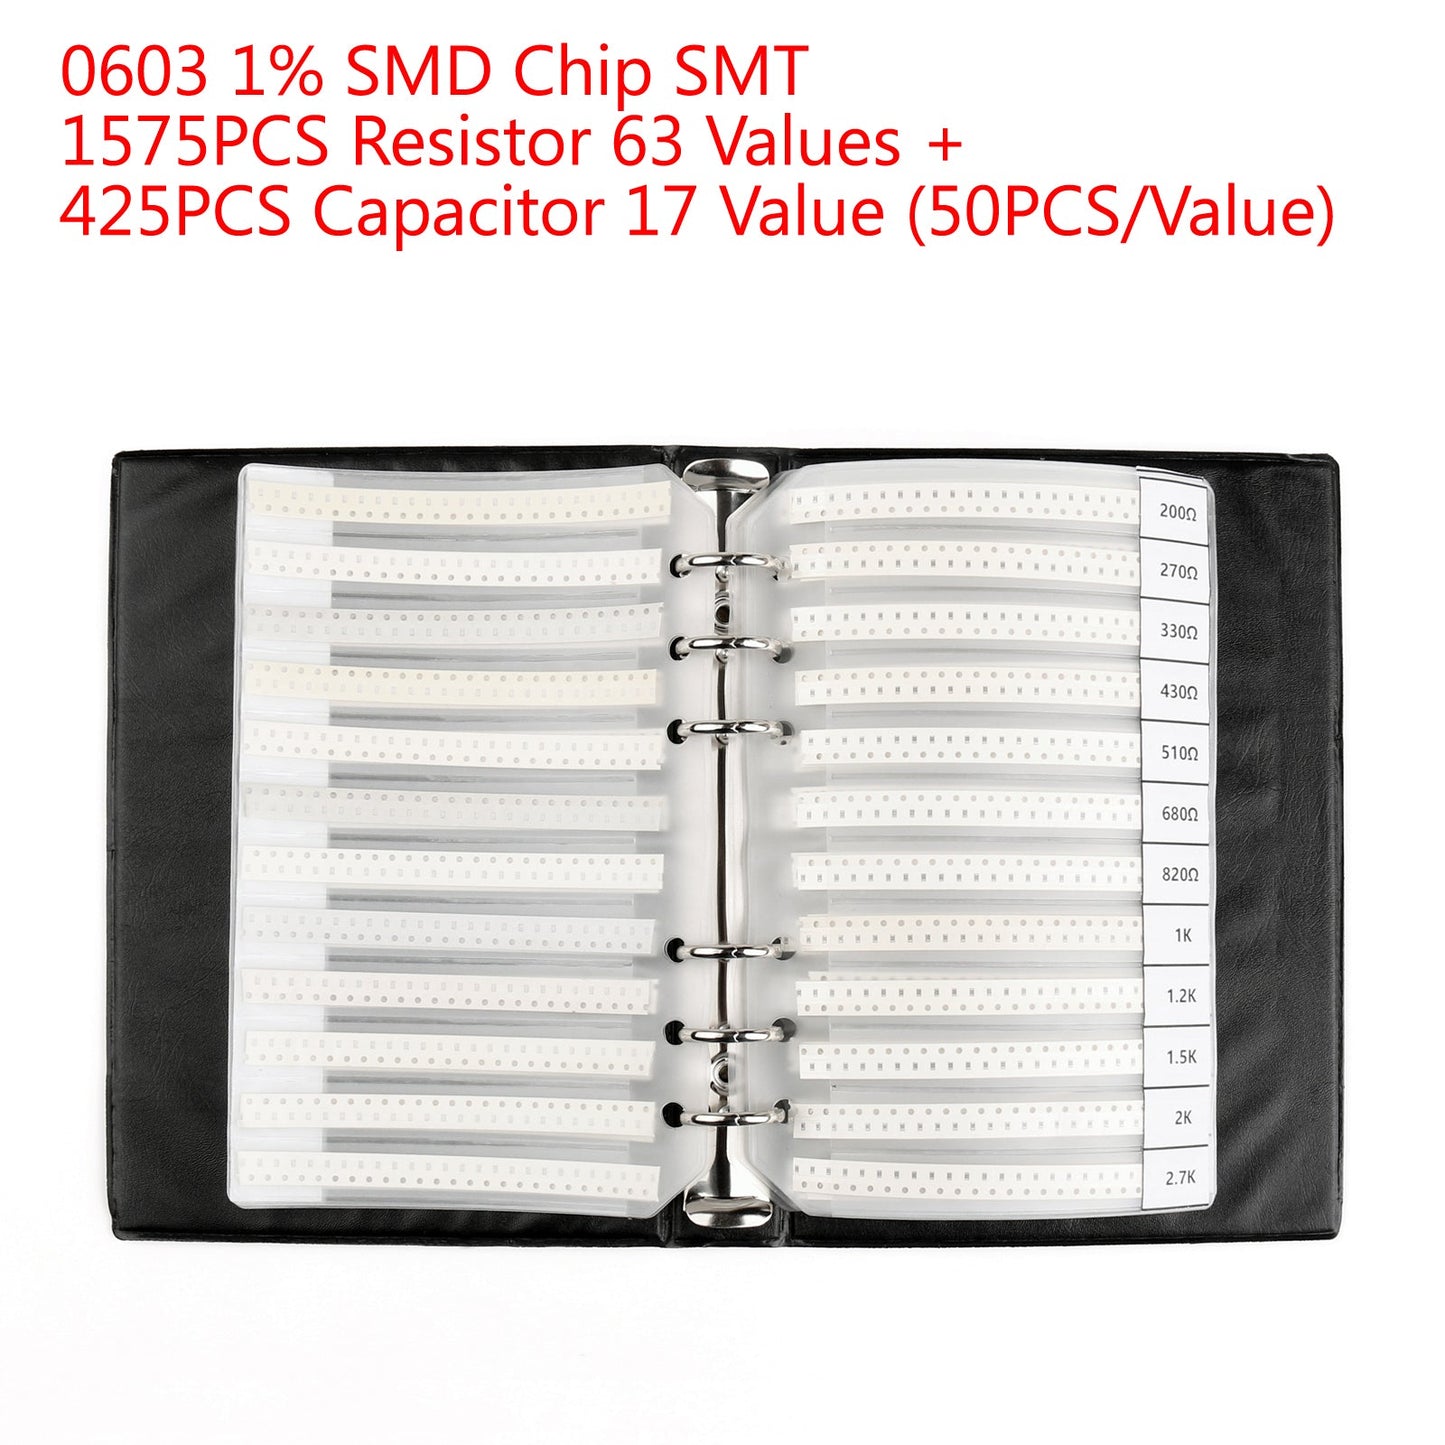 2000PCS 0603 1% SMD Chip SMT Resistor 63 Values + Capacitor 17 Value Sample Book